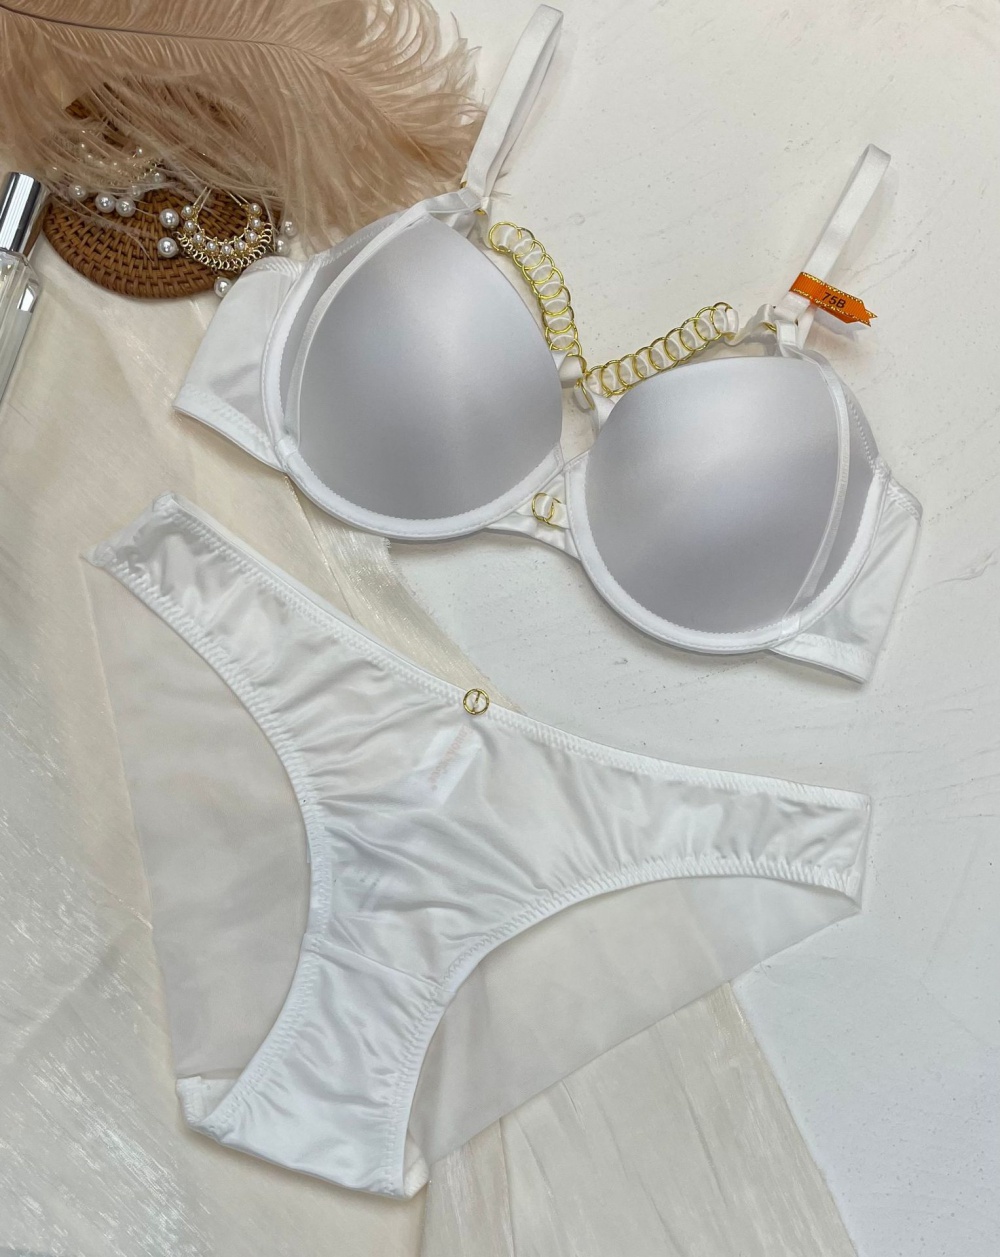 Adjustable summer Bra tracelessness underwear for women